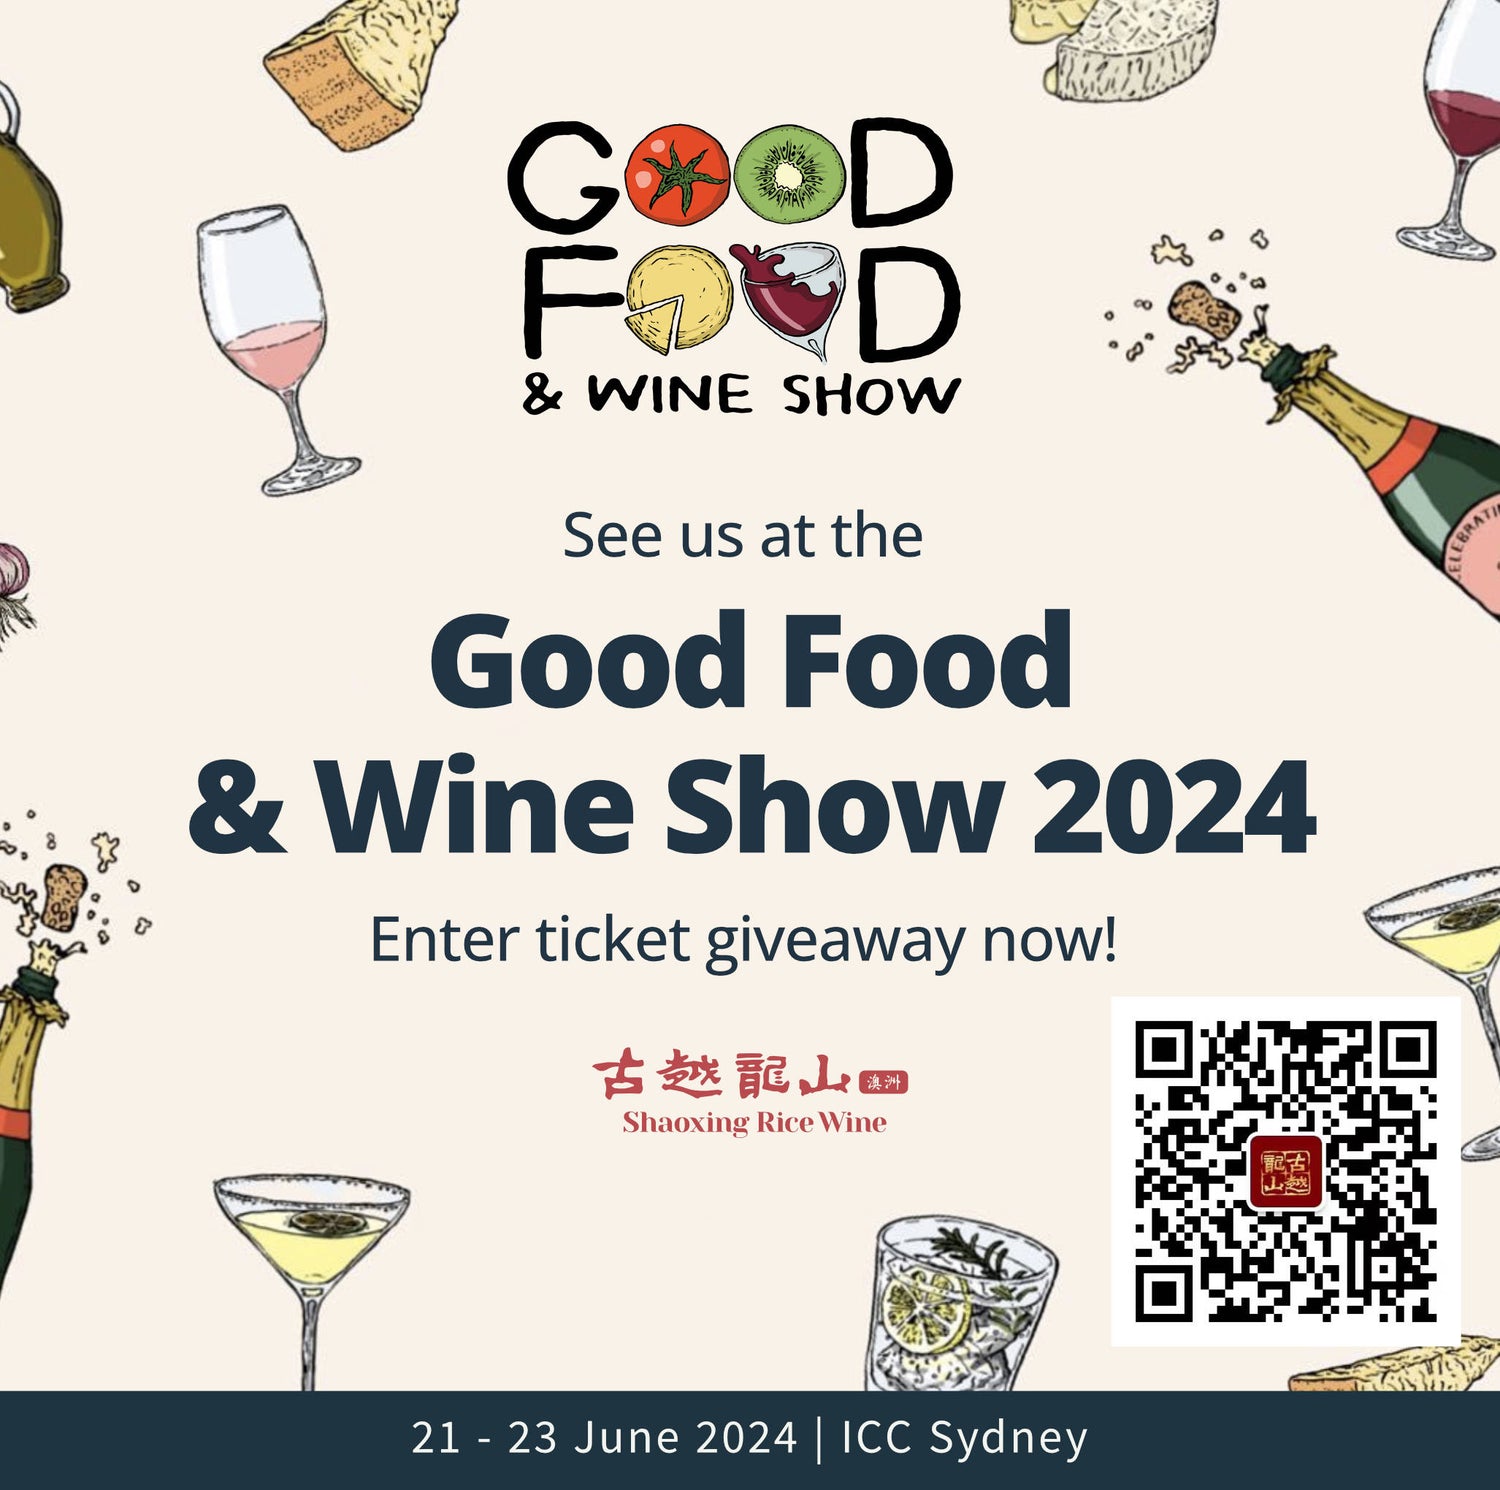 Shaoxing Rice Wine attending Good Food & Wine Show 2024 古越龙山花雕黄酒